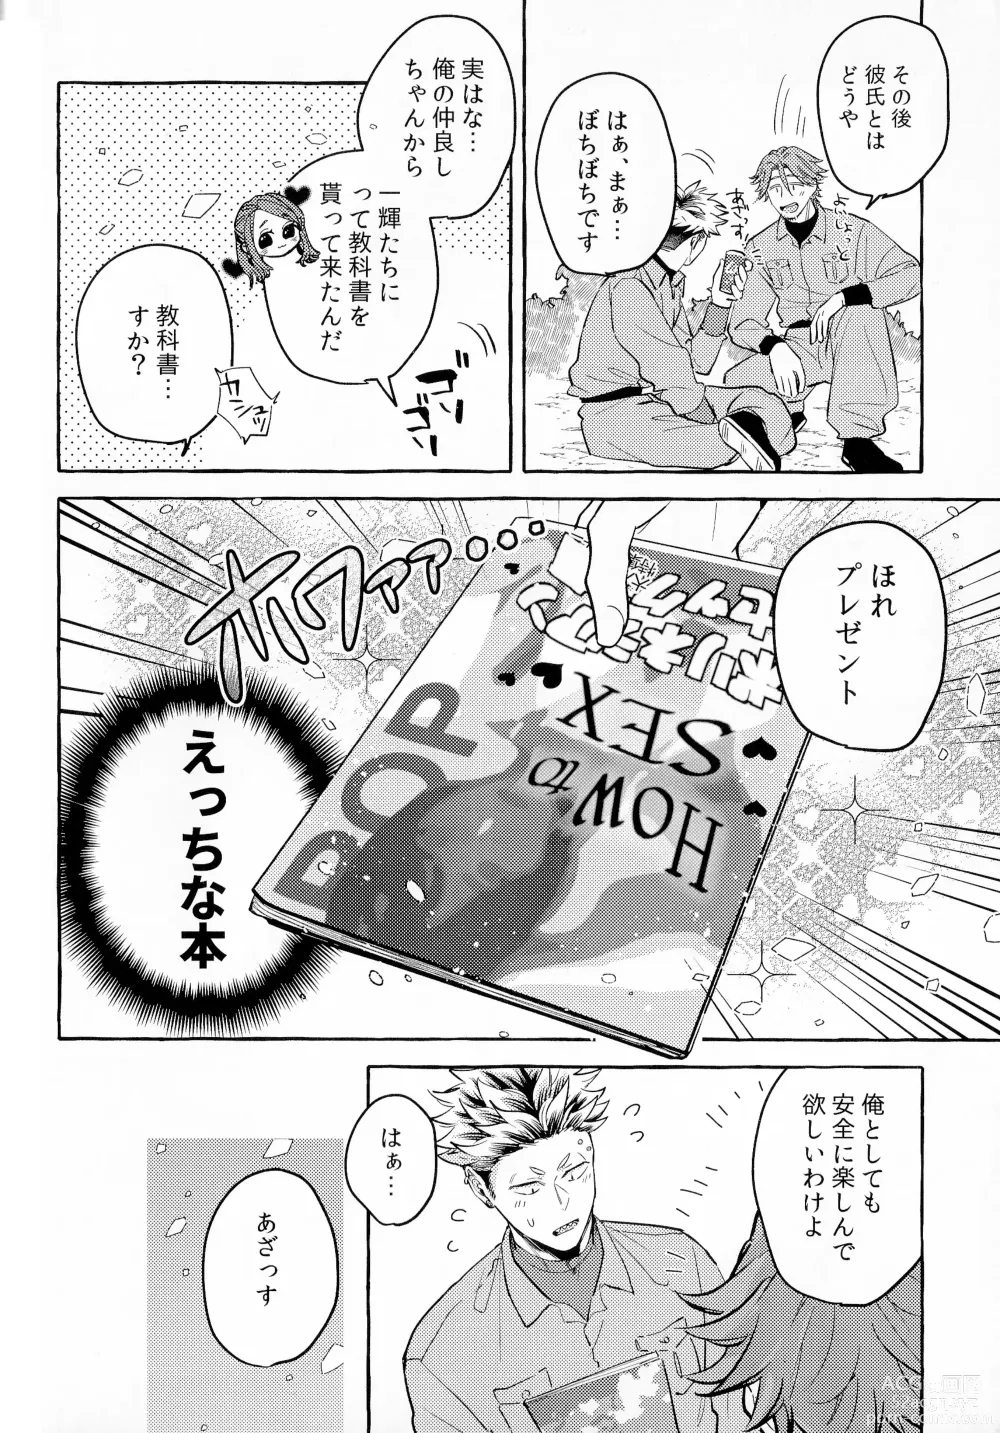 Page 7 of doujinshi skip run!run!run!